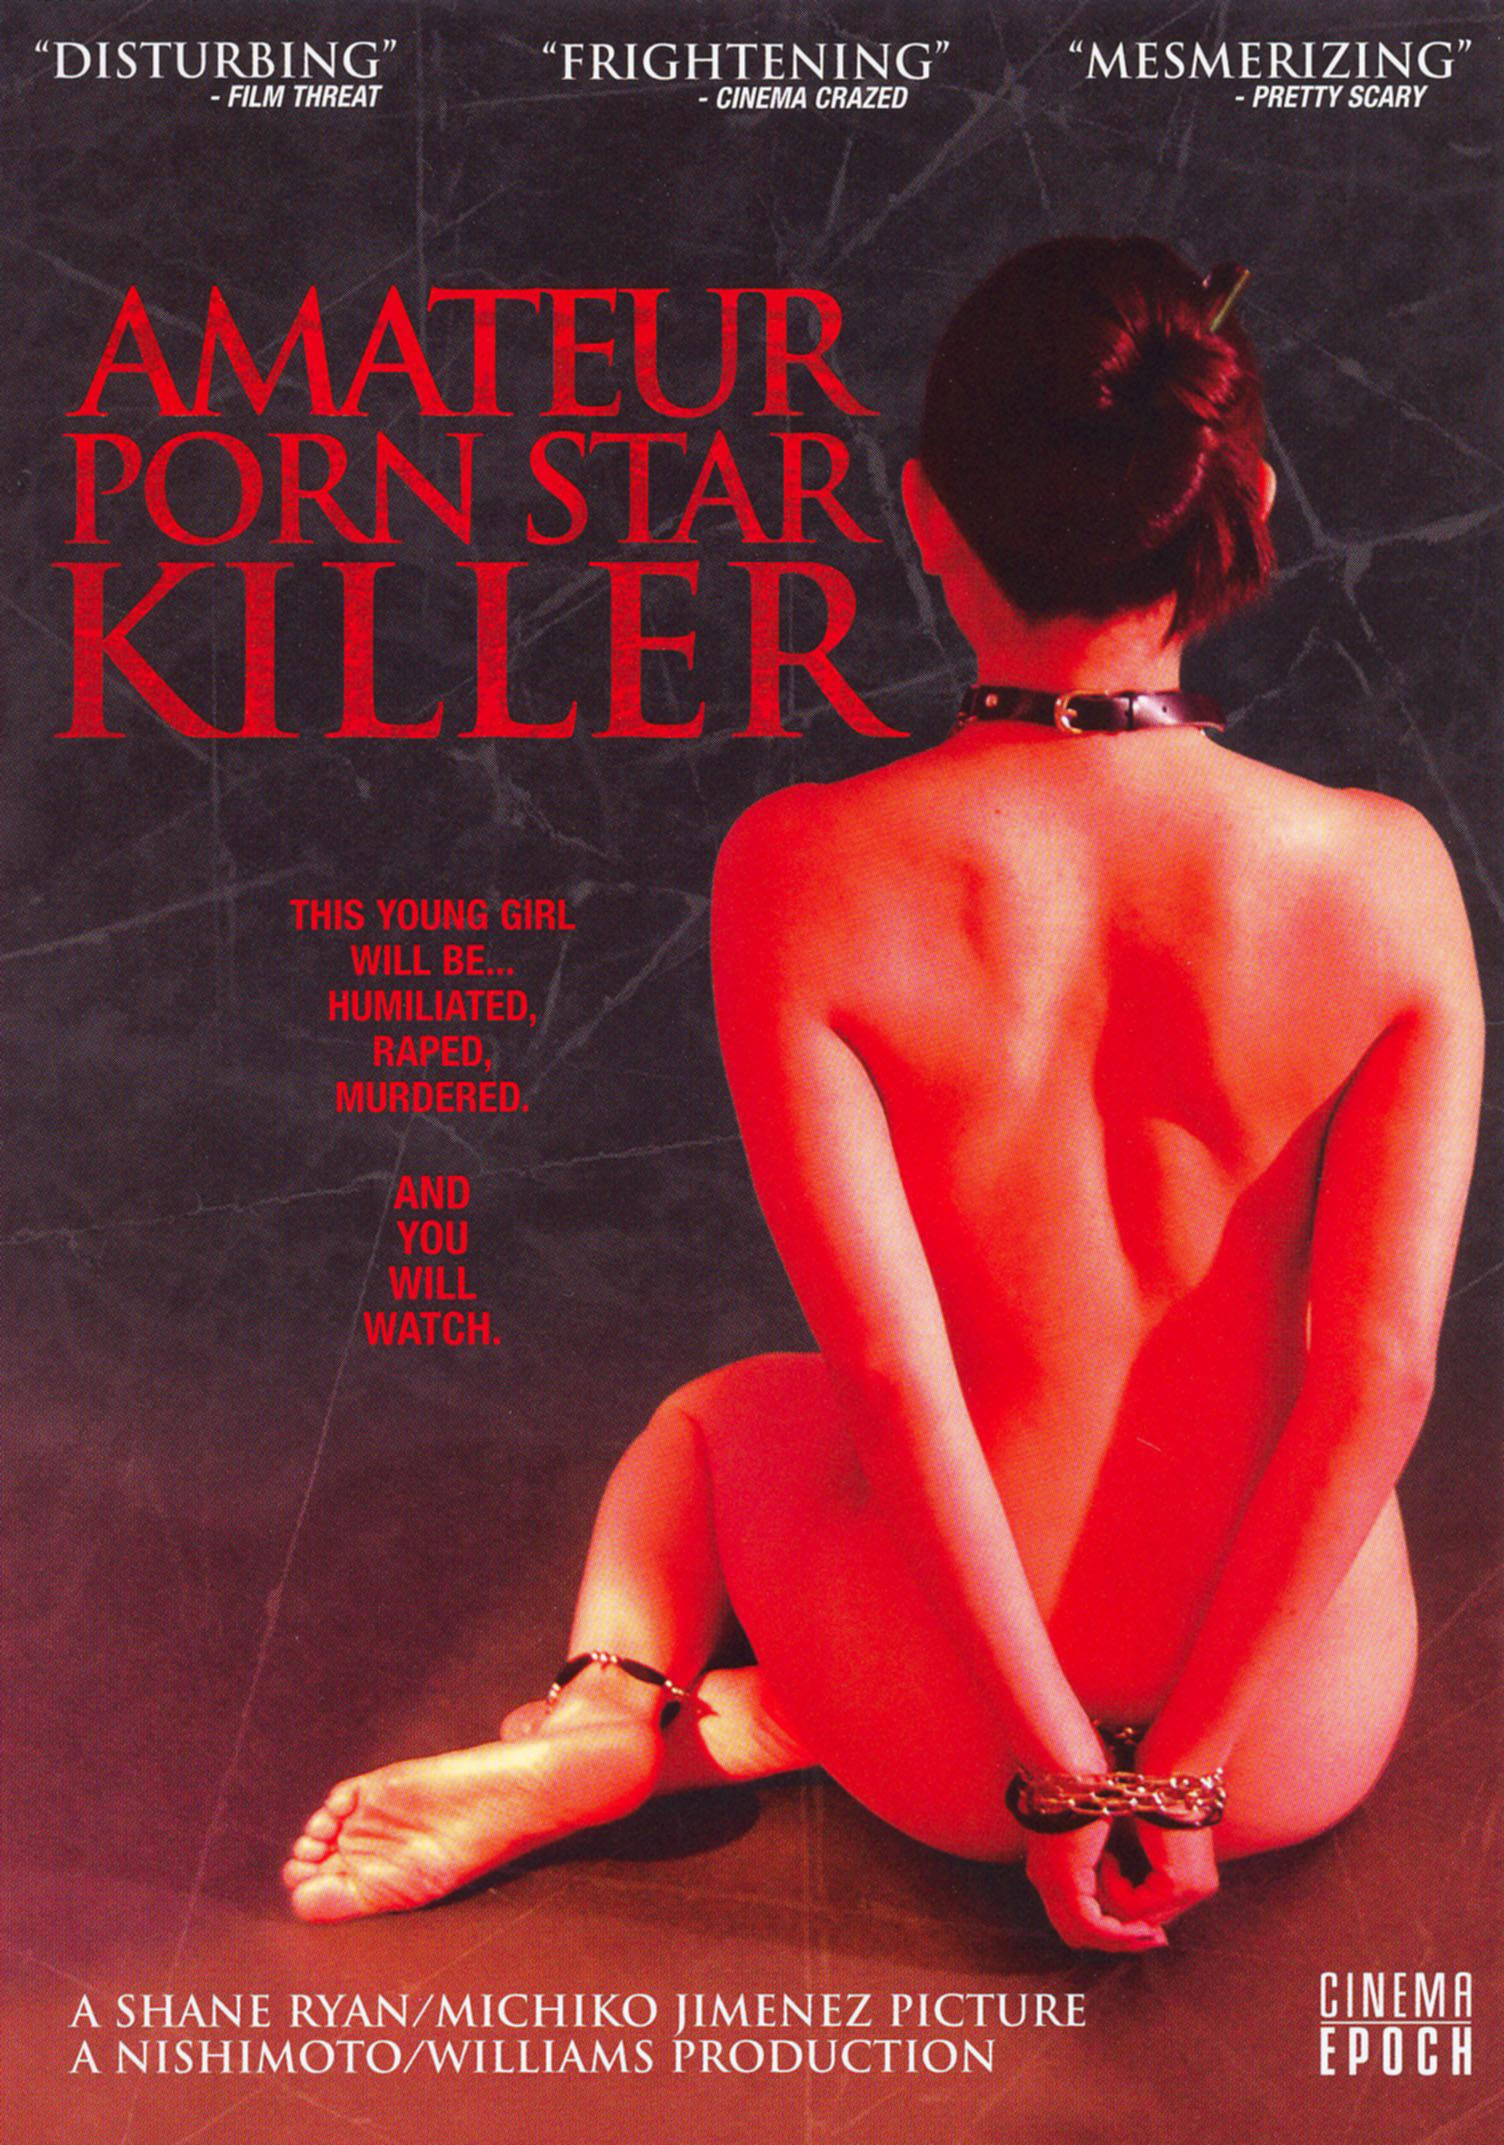 amateur porn star killer full movie